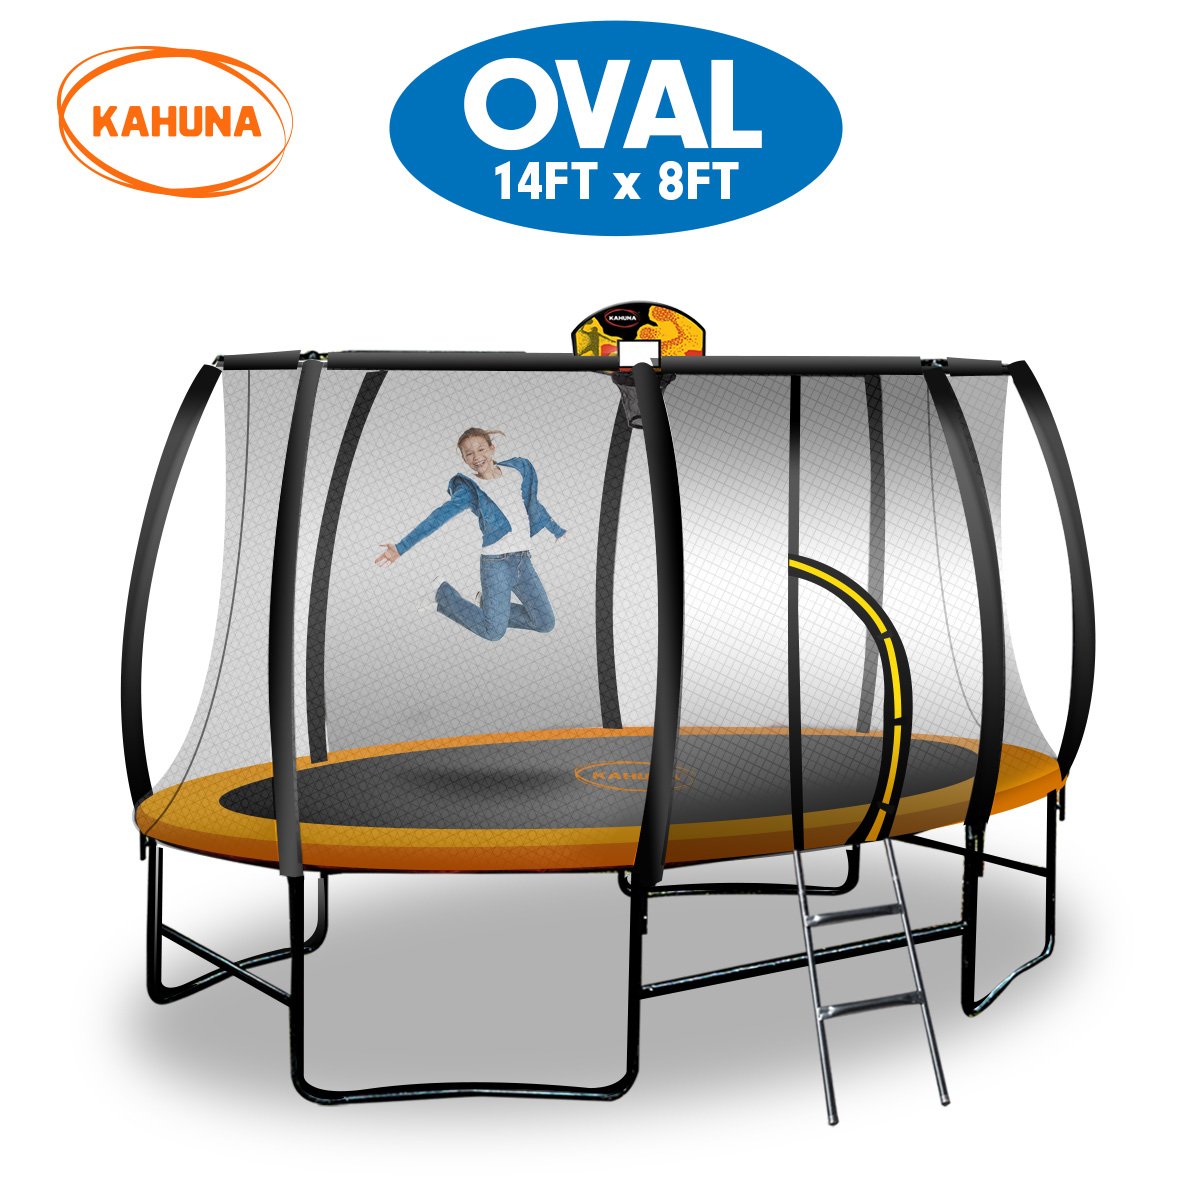 Kahuna Trampoline 8 ft x 14ft Oval with Basketball Set - Orange 2